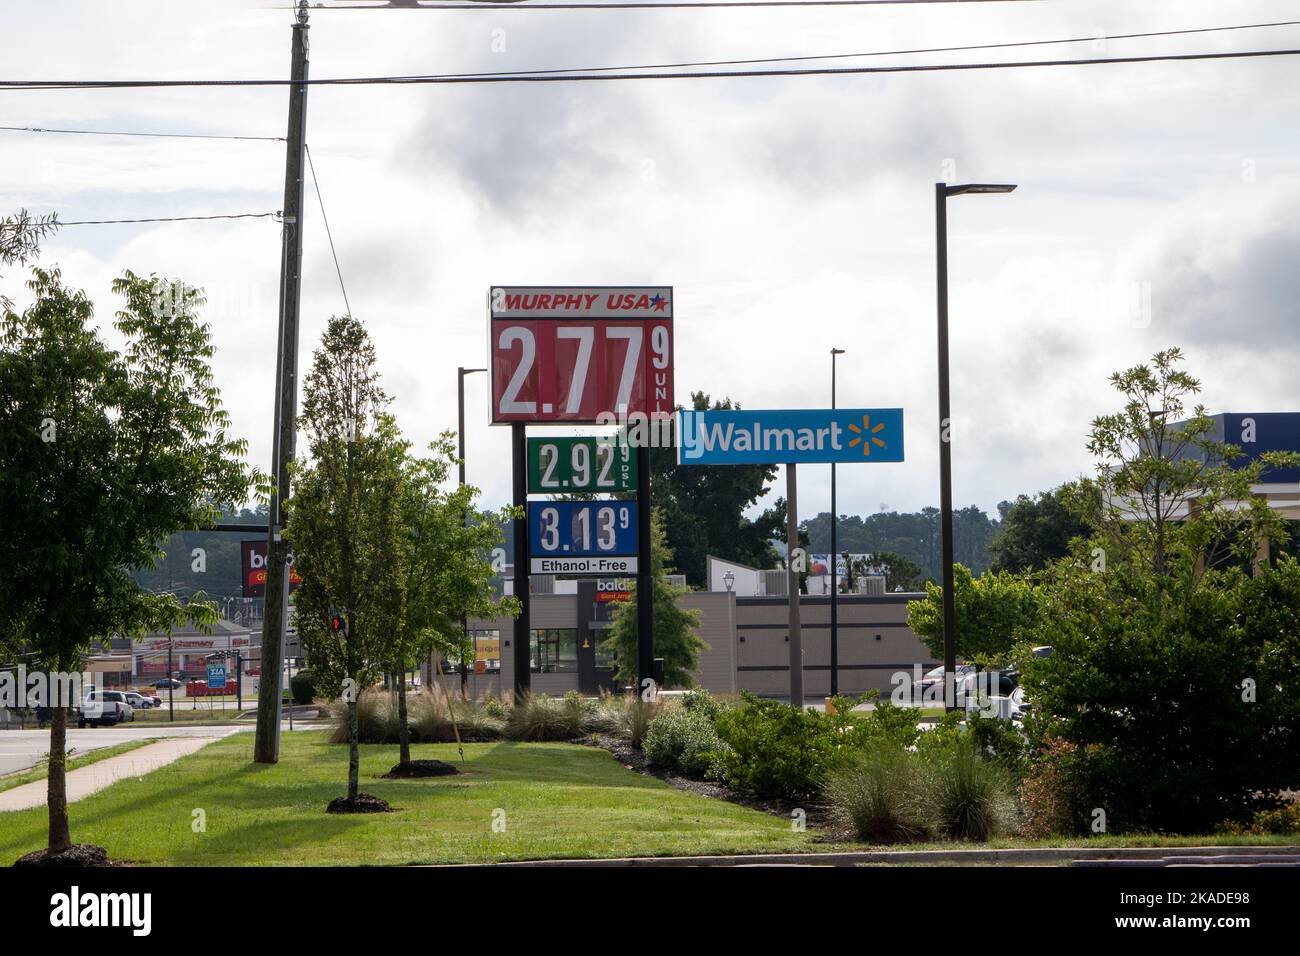 Augusta, Ga USA - 07 19 21: Murphy Gas station street gas price sign Stock Photo